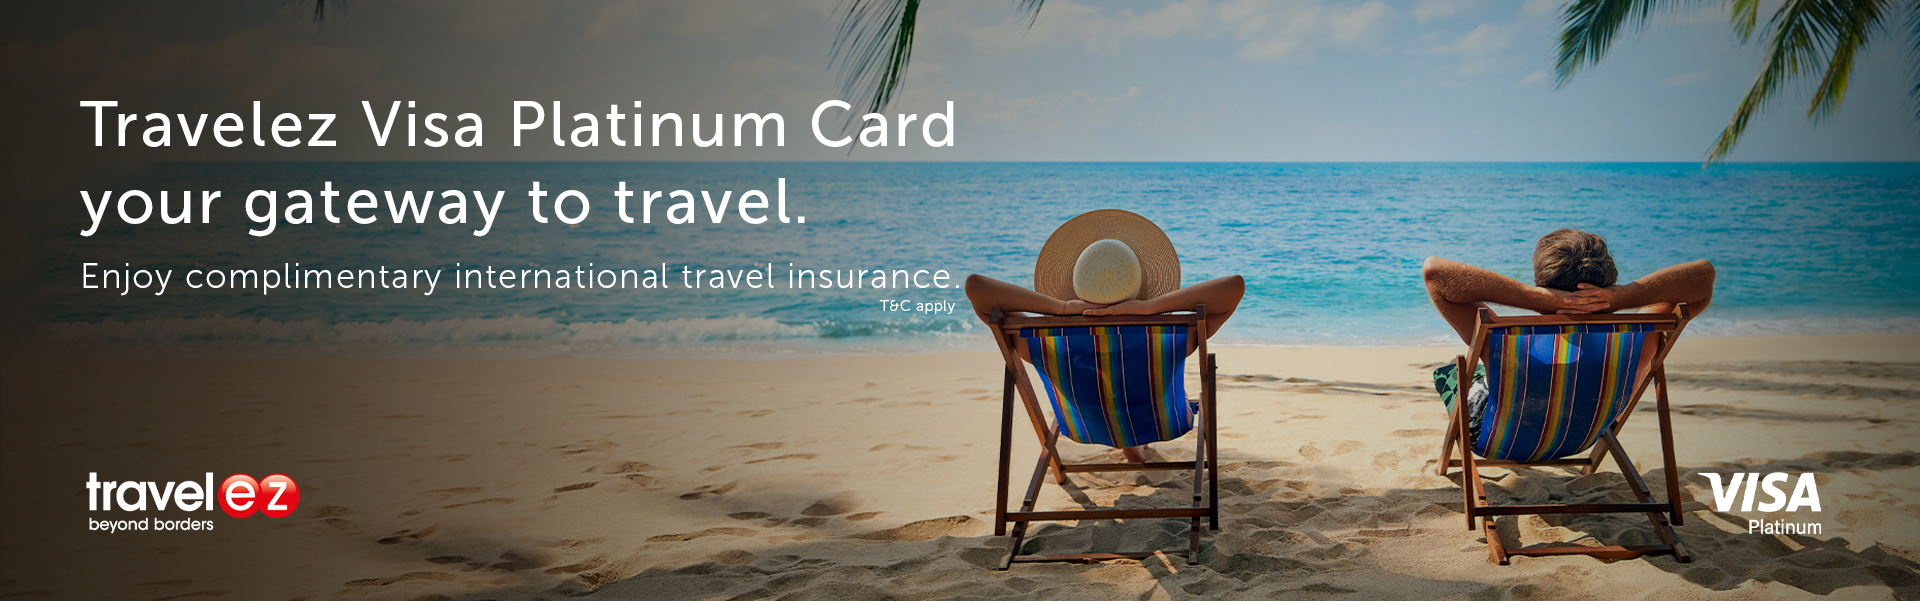 Travelez Visa Platinum Card to travel